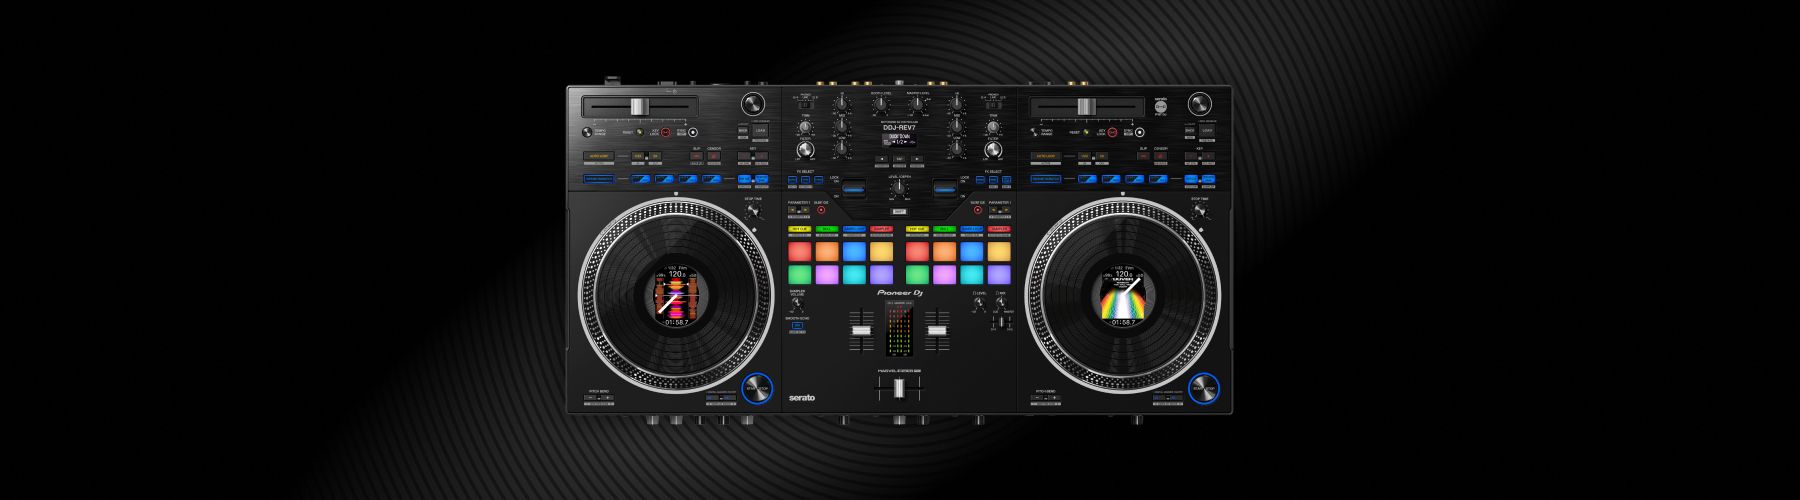 Introducing the Pioneer DJ DDJ-REV7 | Serato